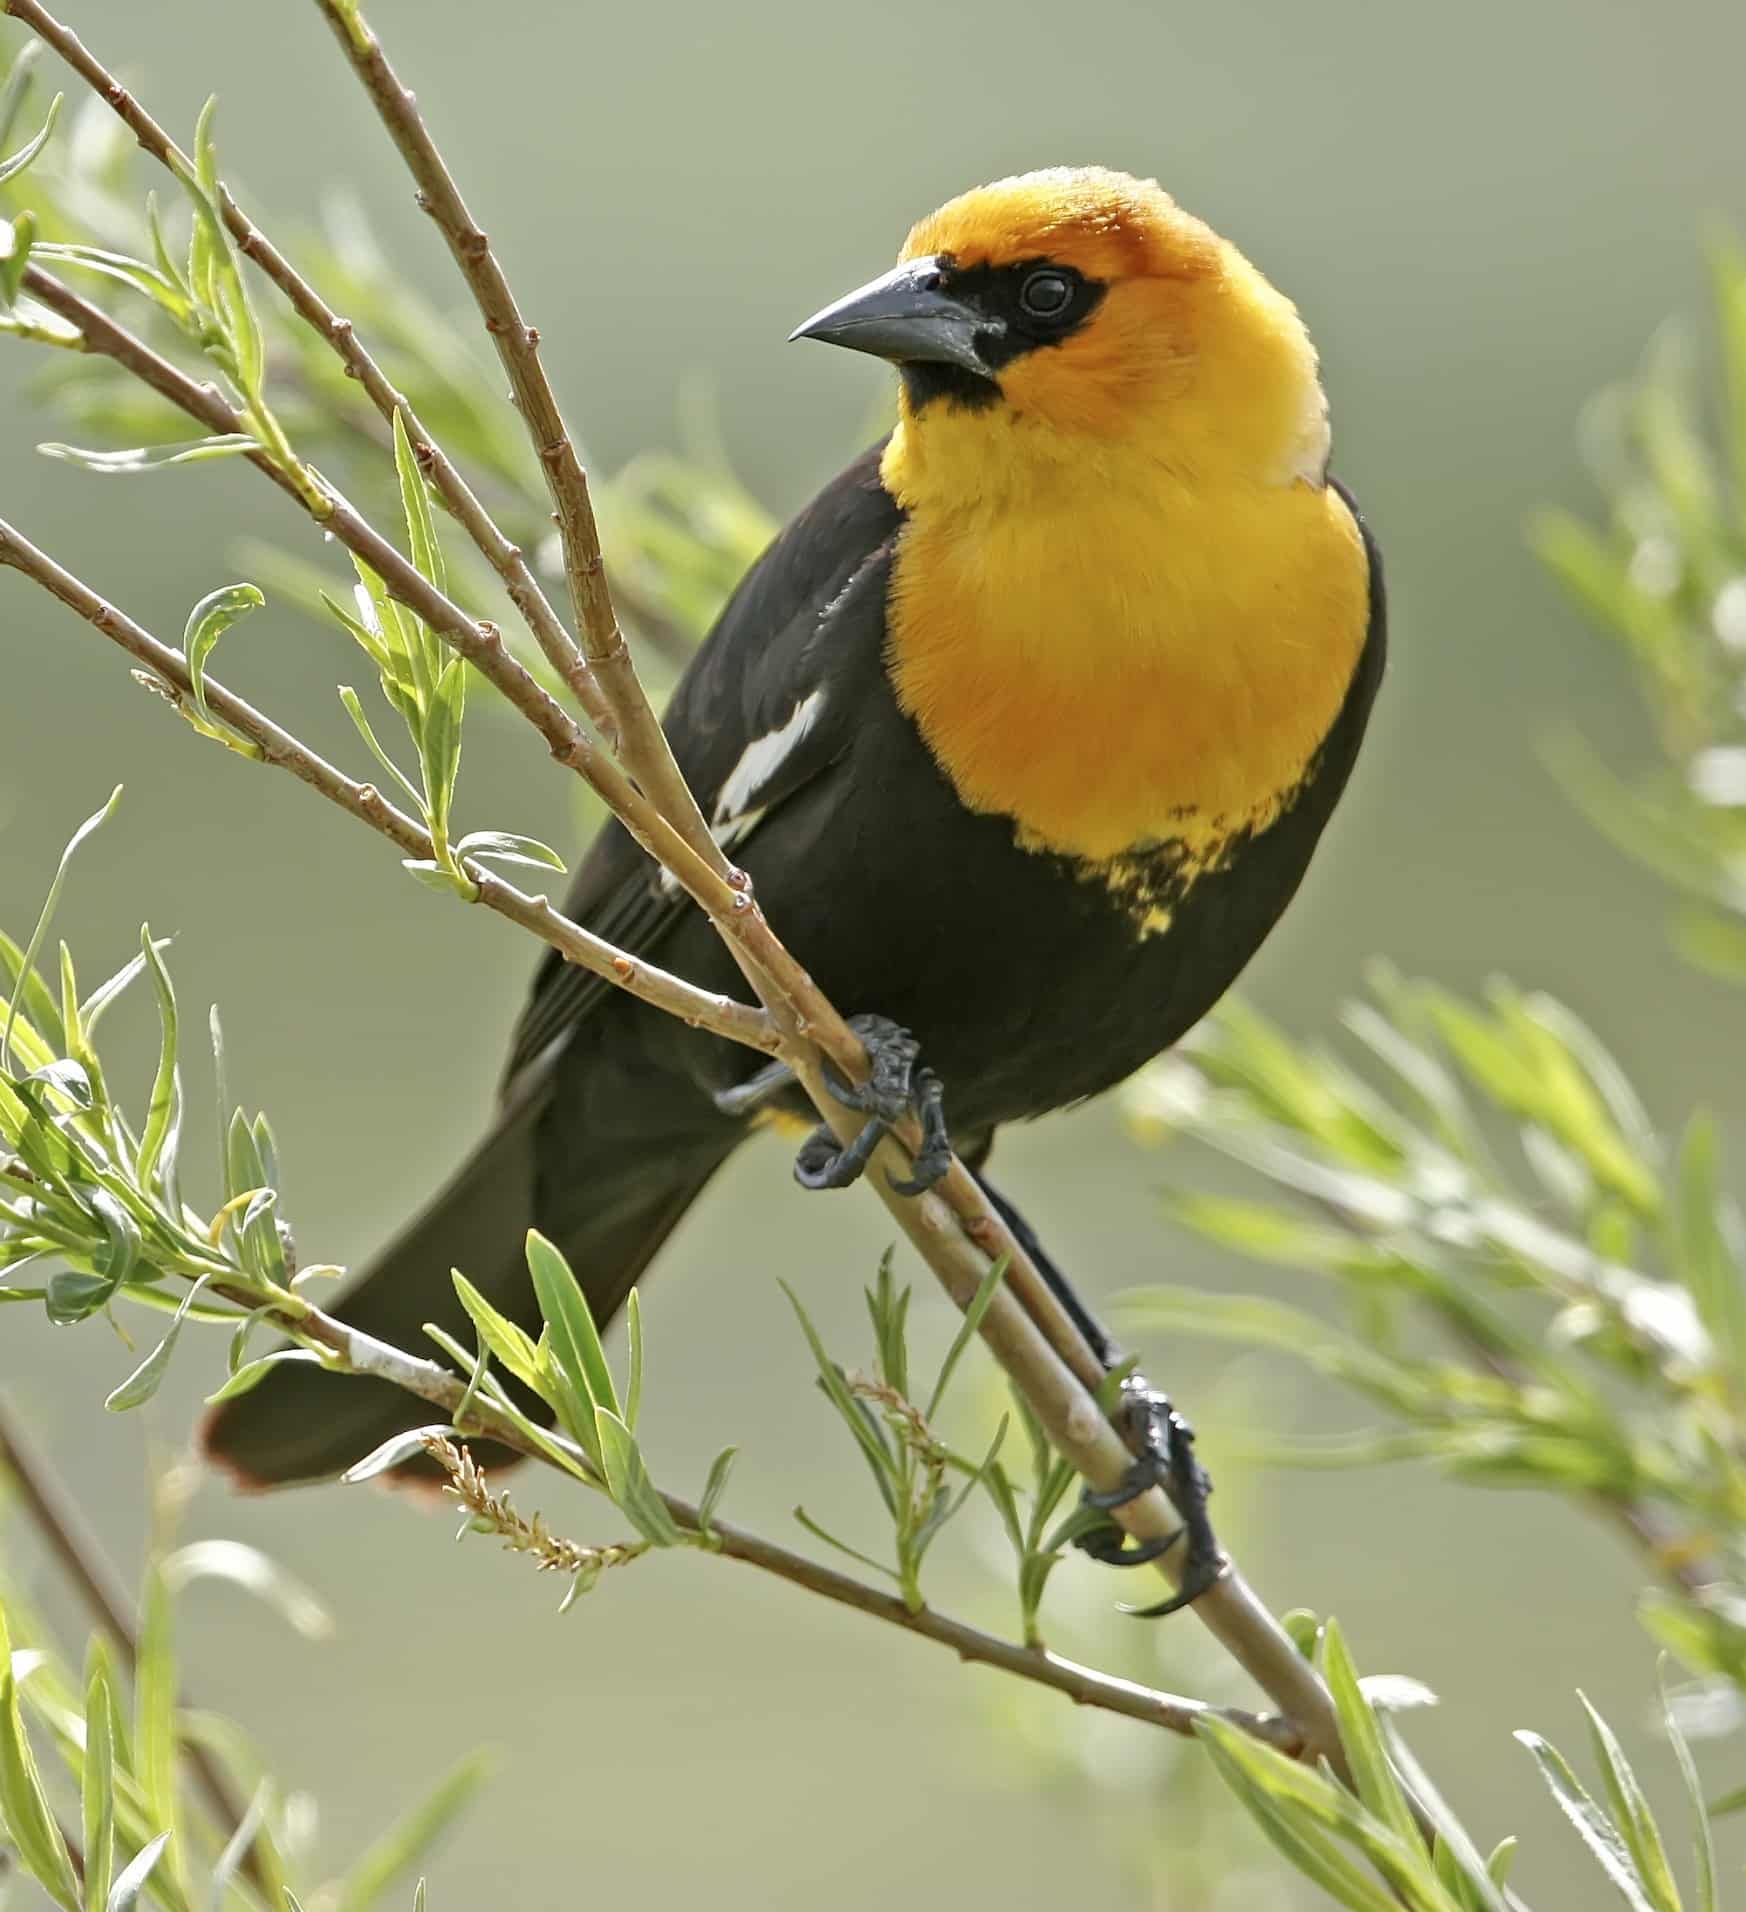 Yellow-headed Blackbird on a branch